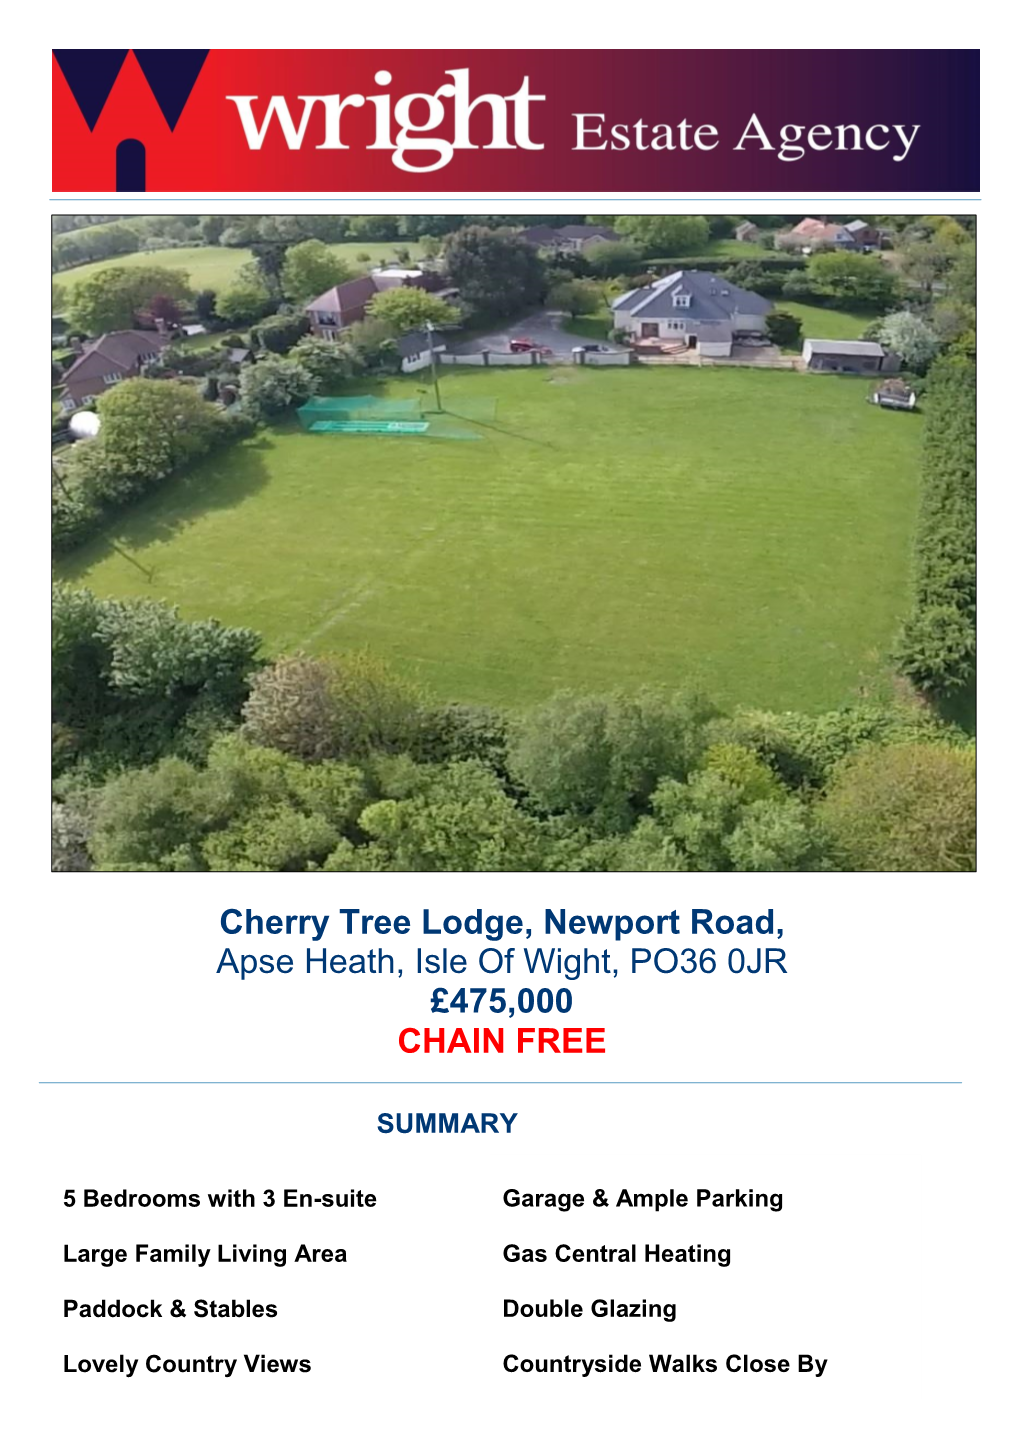 Cherry Tree Lodge, Newport Road, Apse Heath, Isle of Wight, PO36 0JR